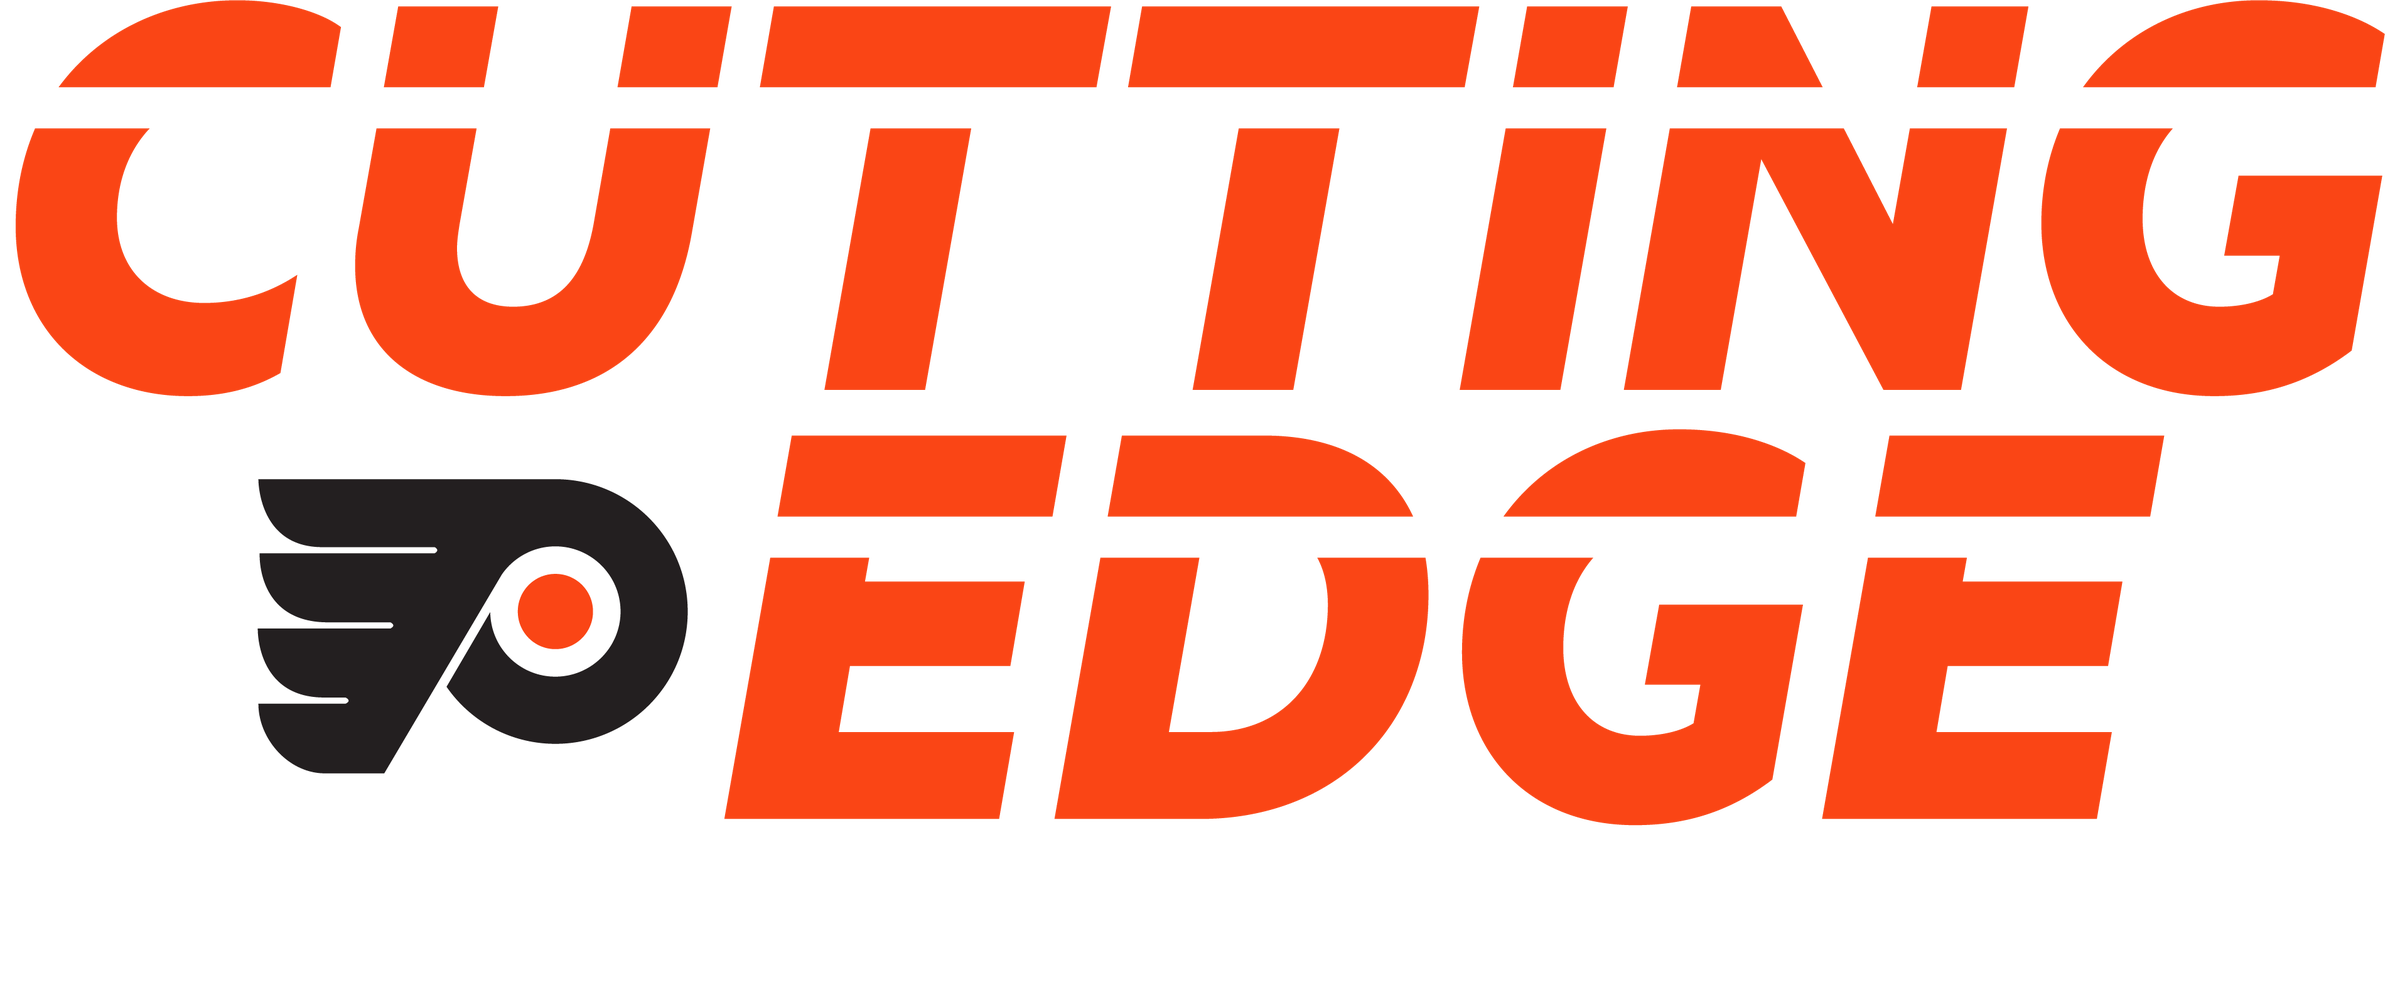 Cutting Edge Pro Shop & Team Store